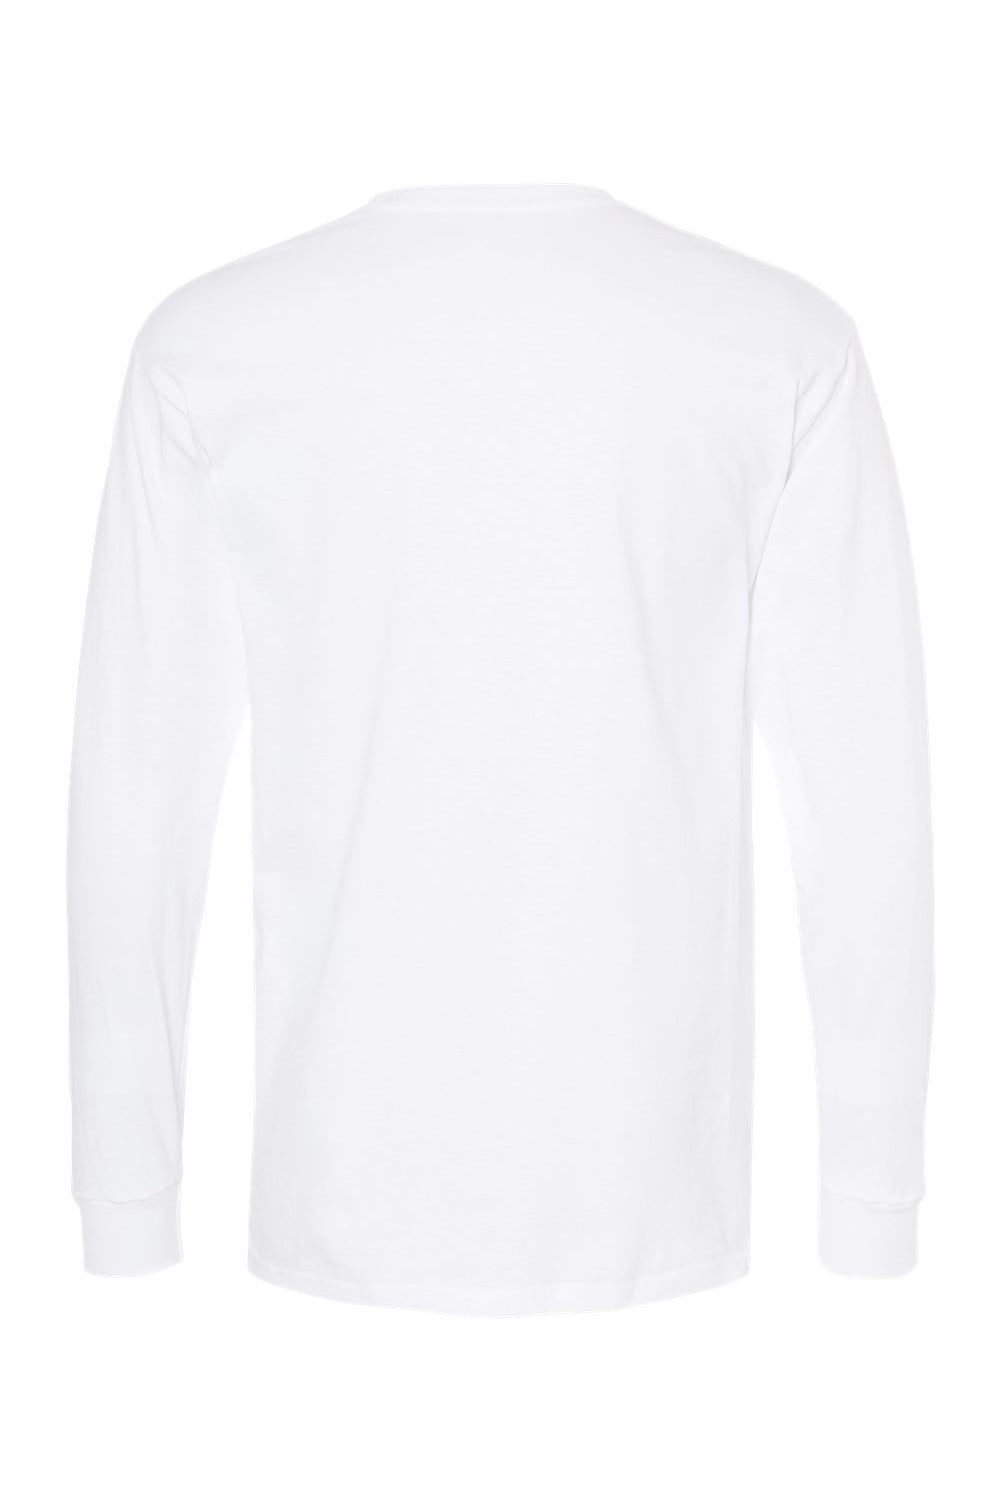 M&O 4820 Mens Gold Soft Touch Long Sleeve Crewneck T-Shirt White Flat Back